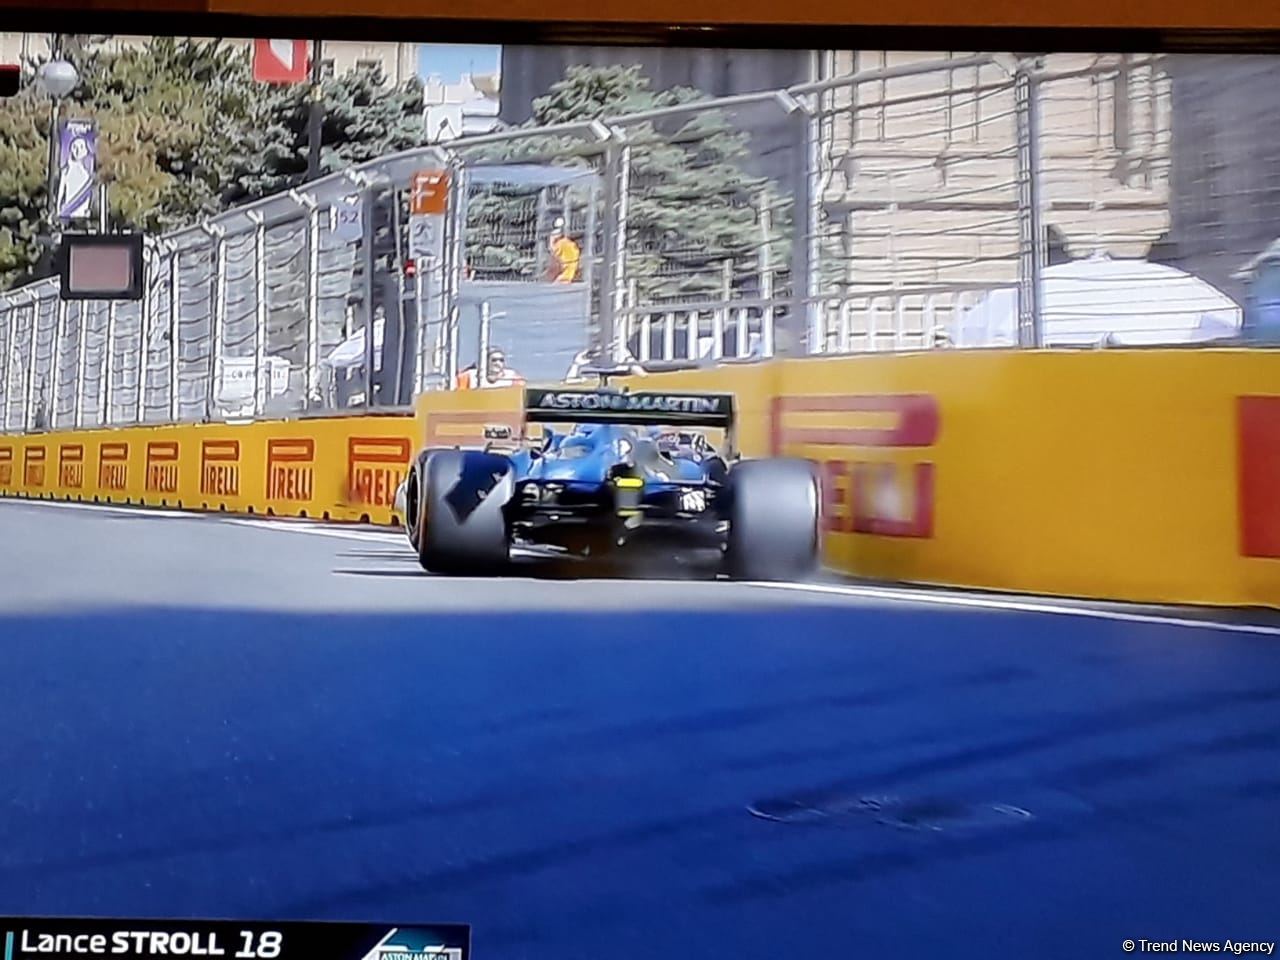 F1 Qualifying Session of Azerbaijan Grand Prix records first crash